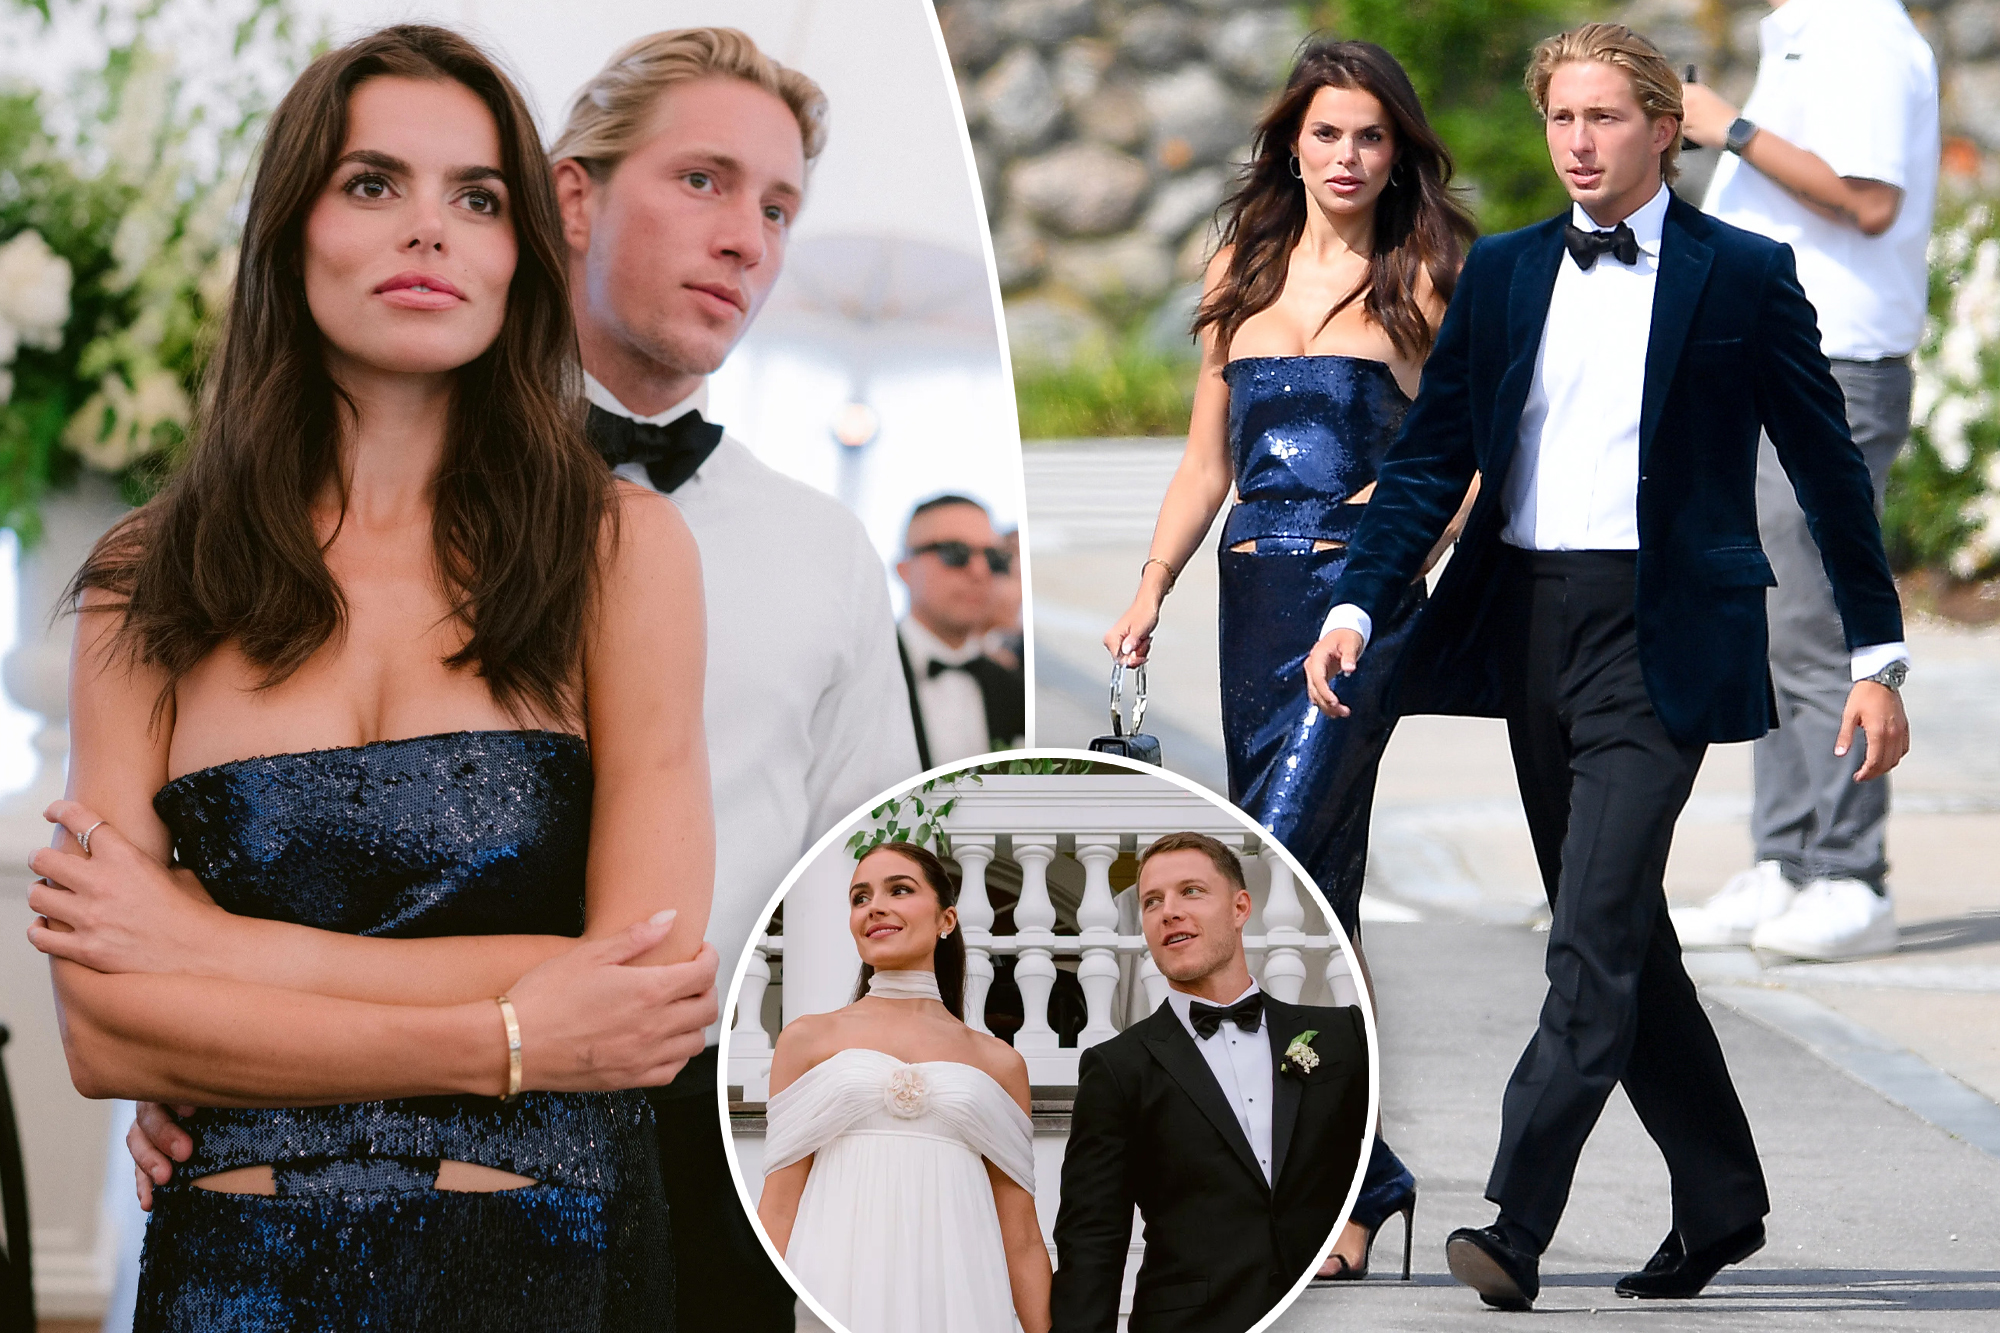 Brooks Nader's Royal Romance: From Divorce to Debuting Love at Olivia Culpo's Wedding